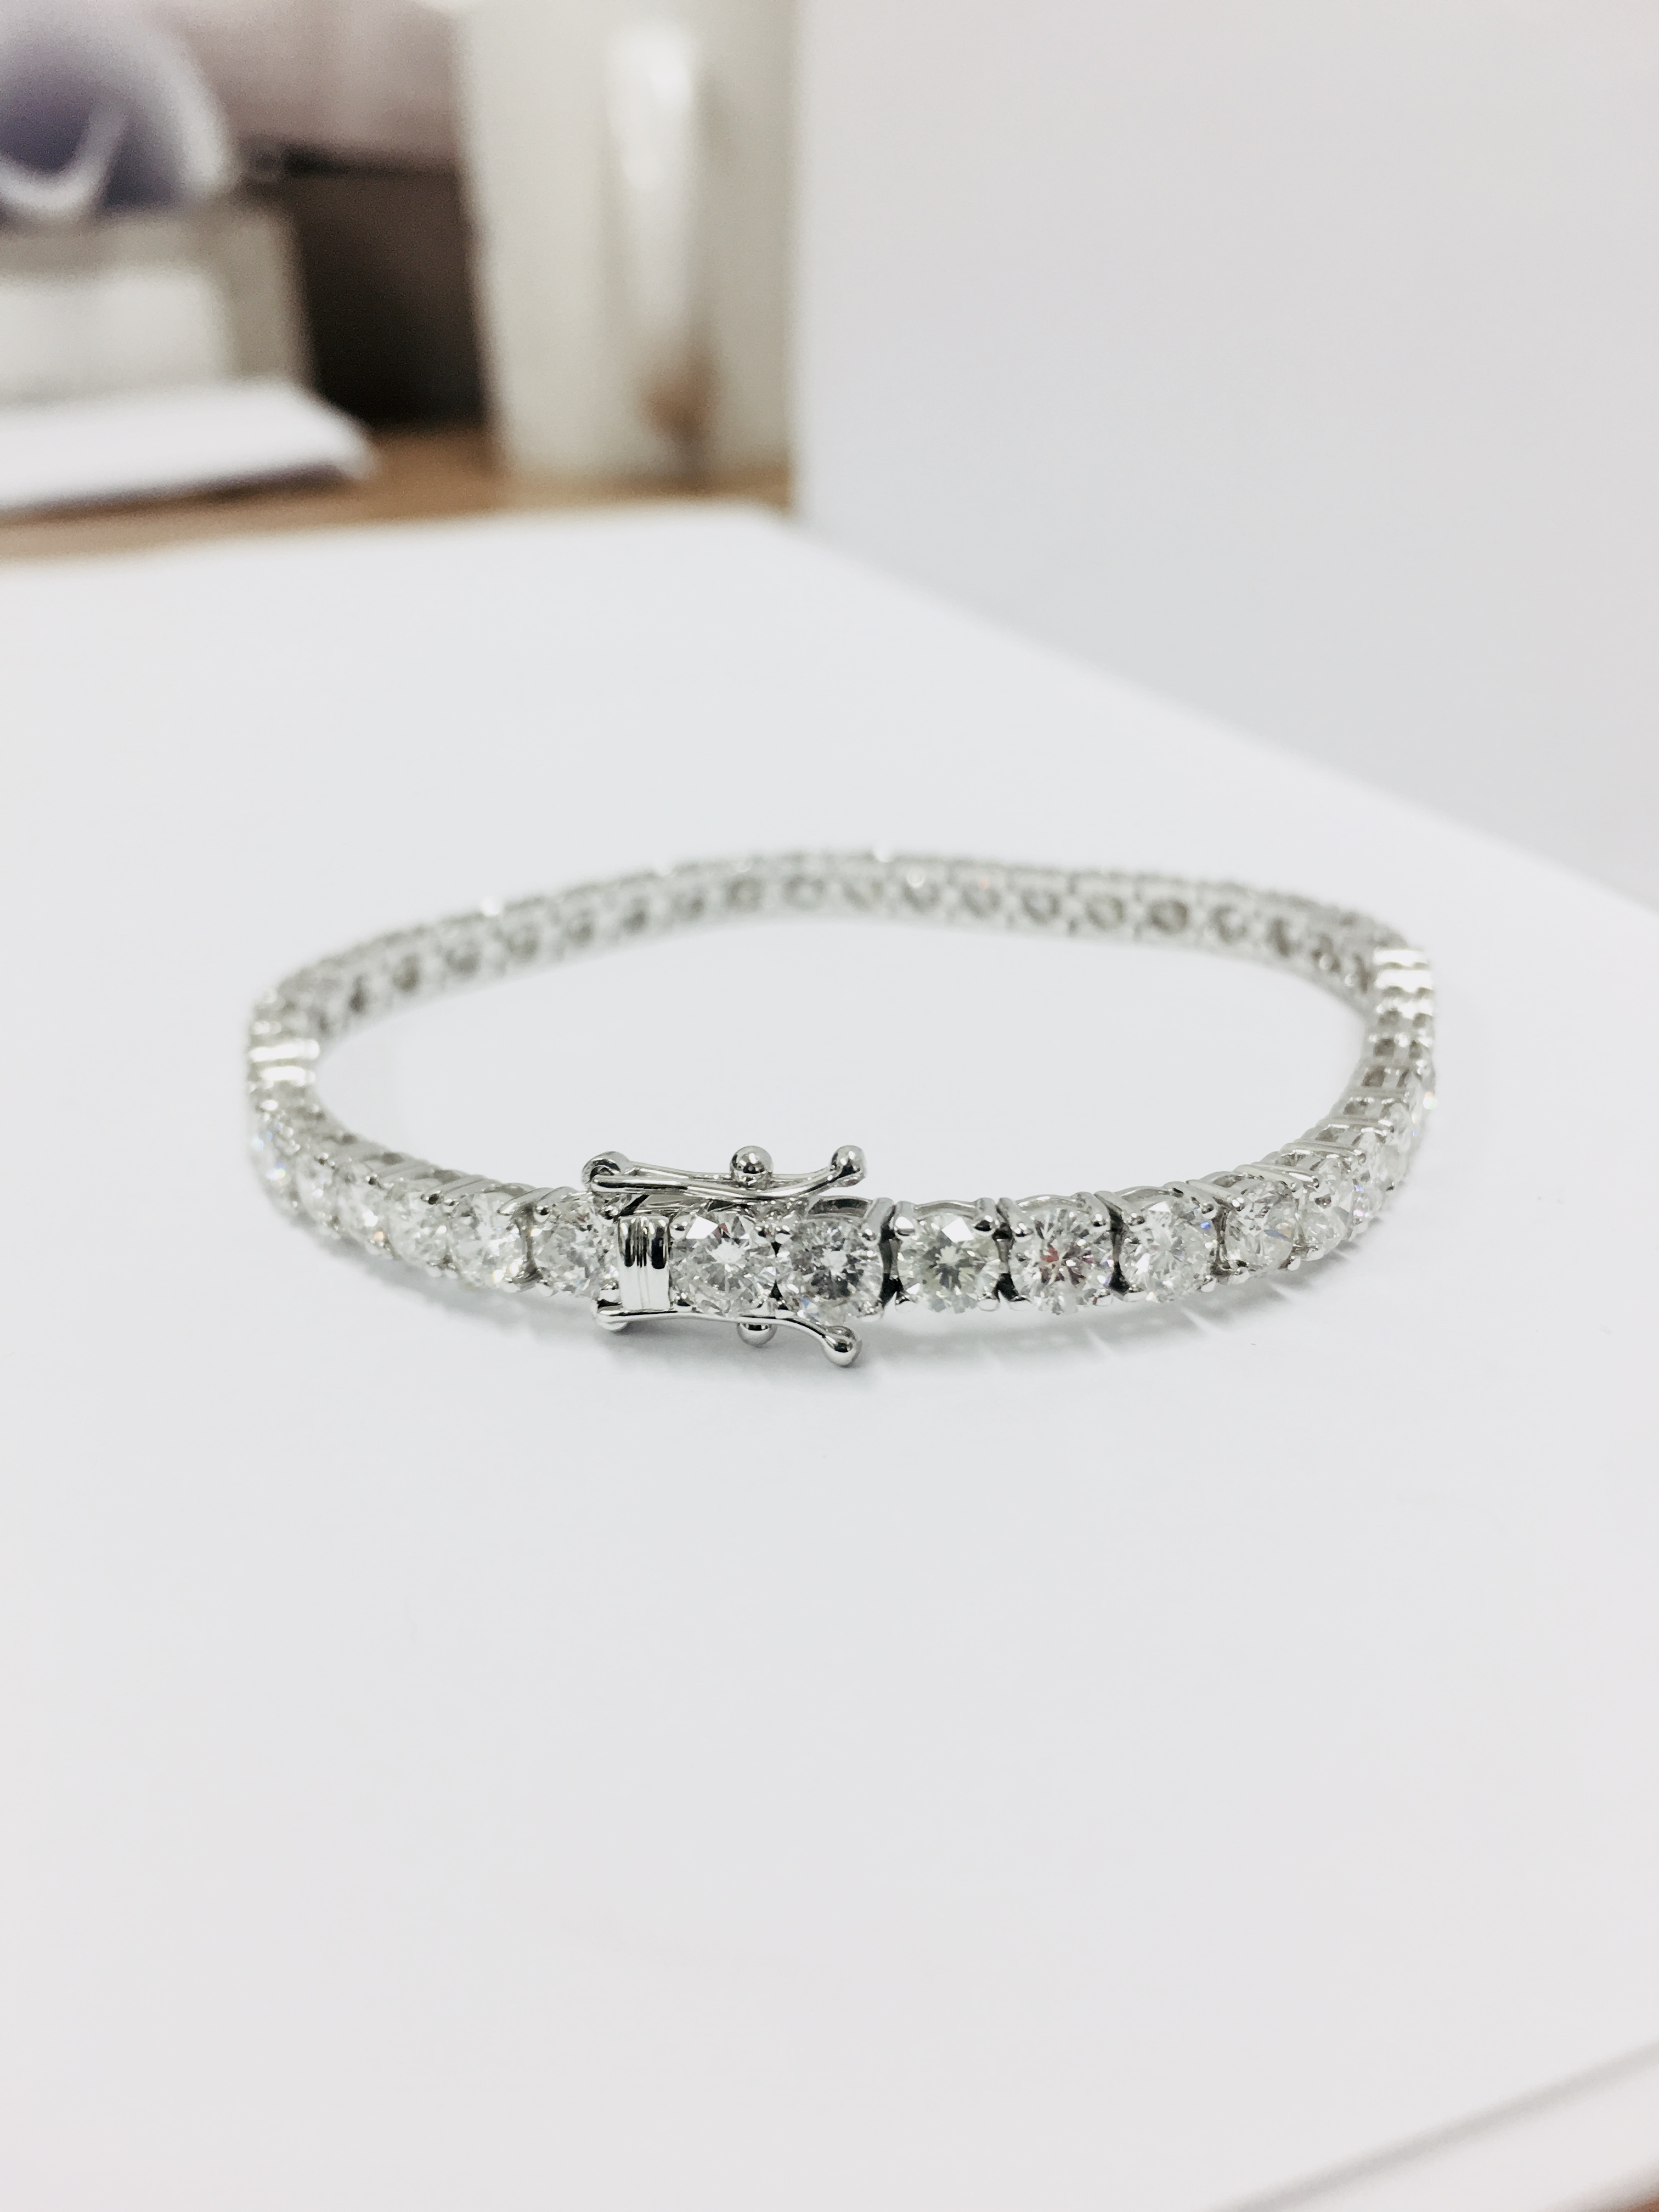 8.00ct Diamond tennis bracelet set with brilliant cut diamonds of G colour - Image 17 of 42